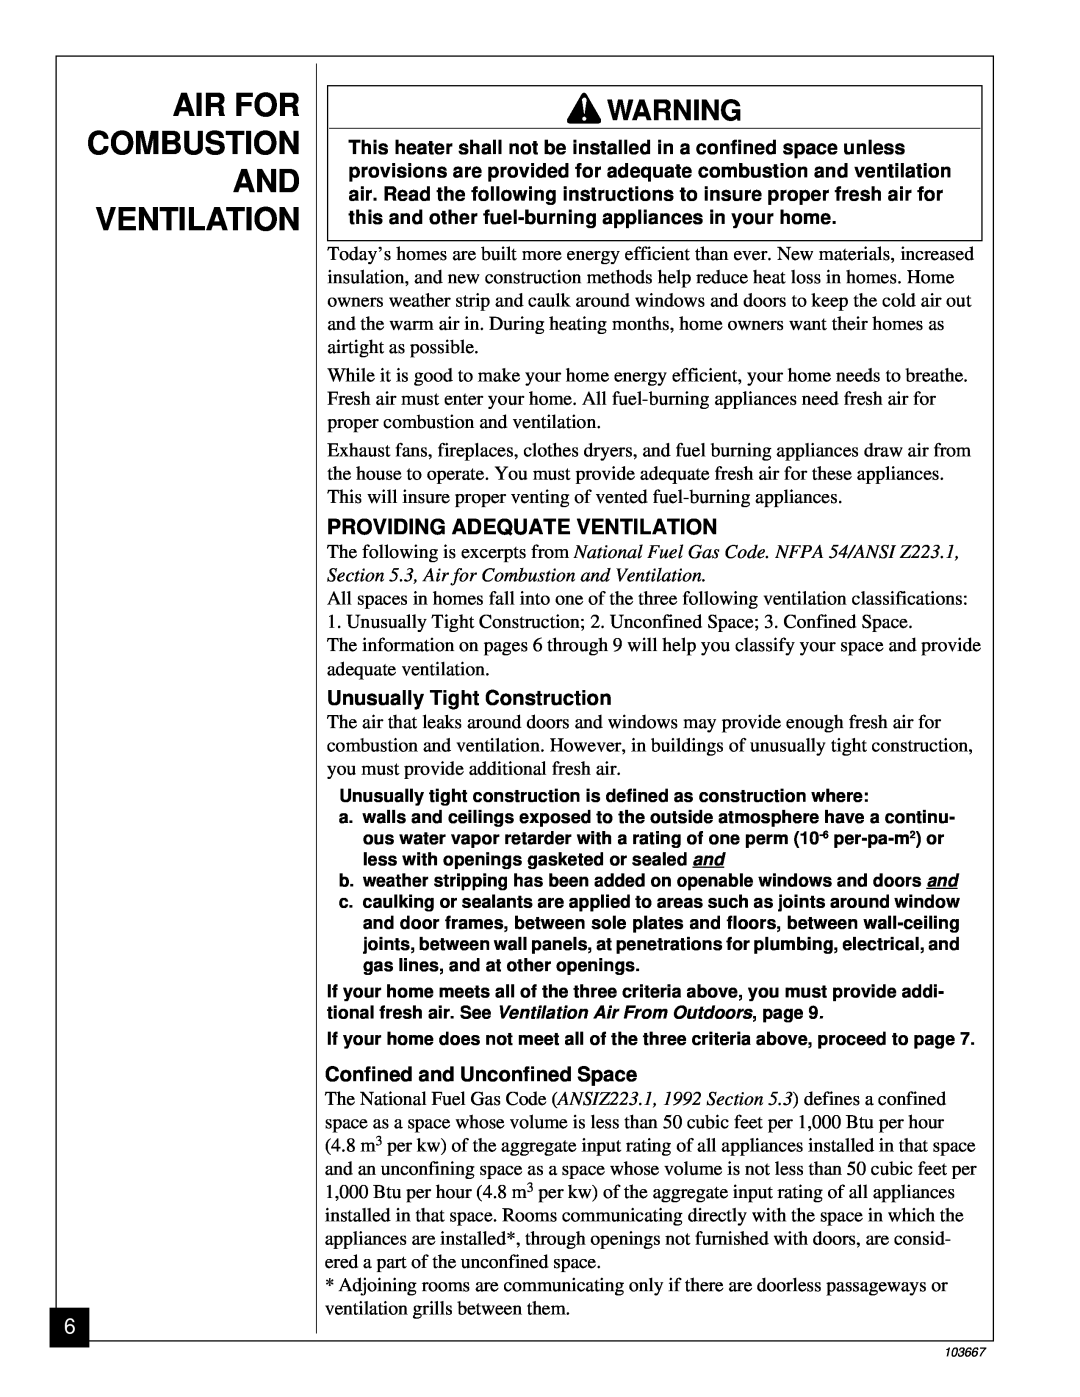 Desa CGCF26TP installation manual Air For Combustion And Ventilation, Providing Adequate Ventilation 